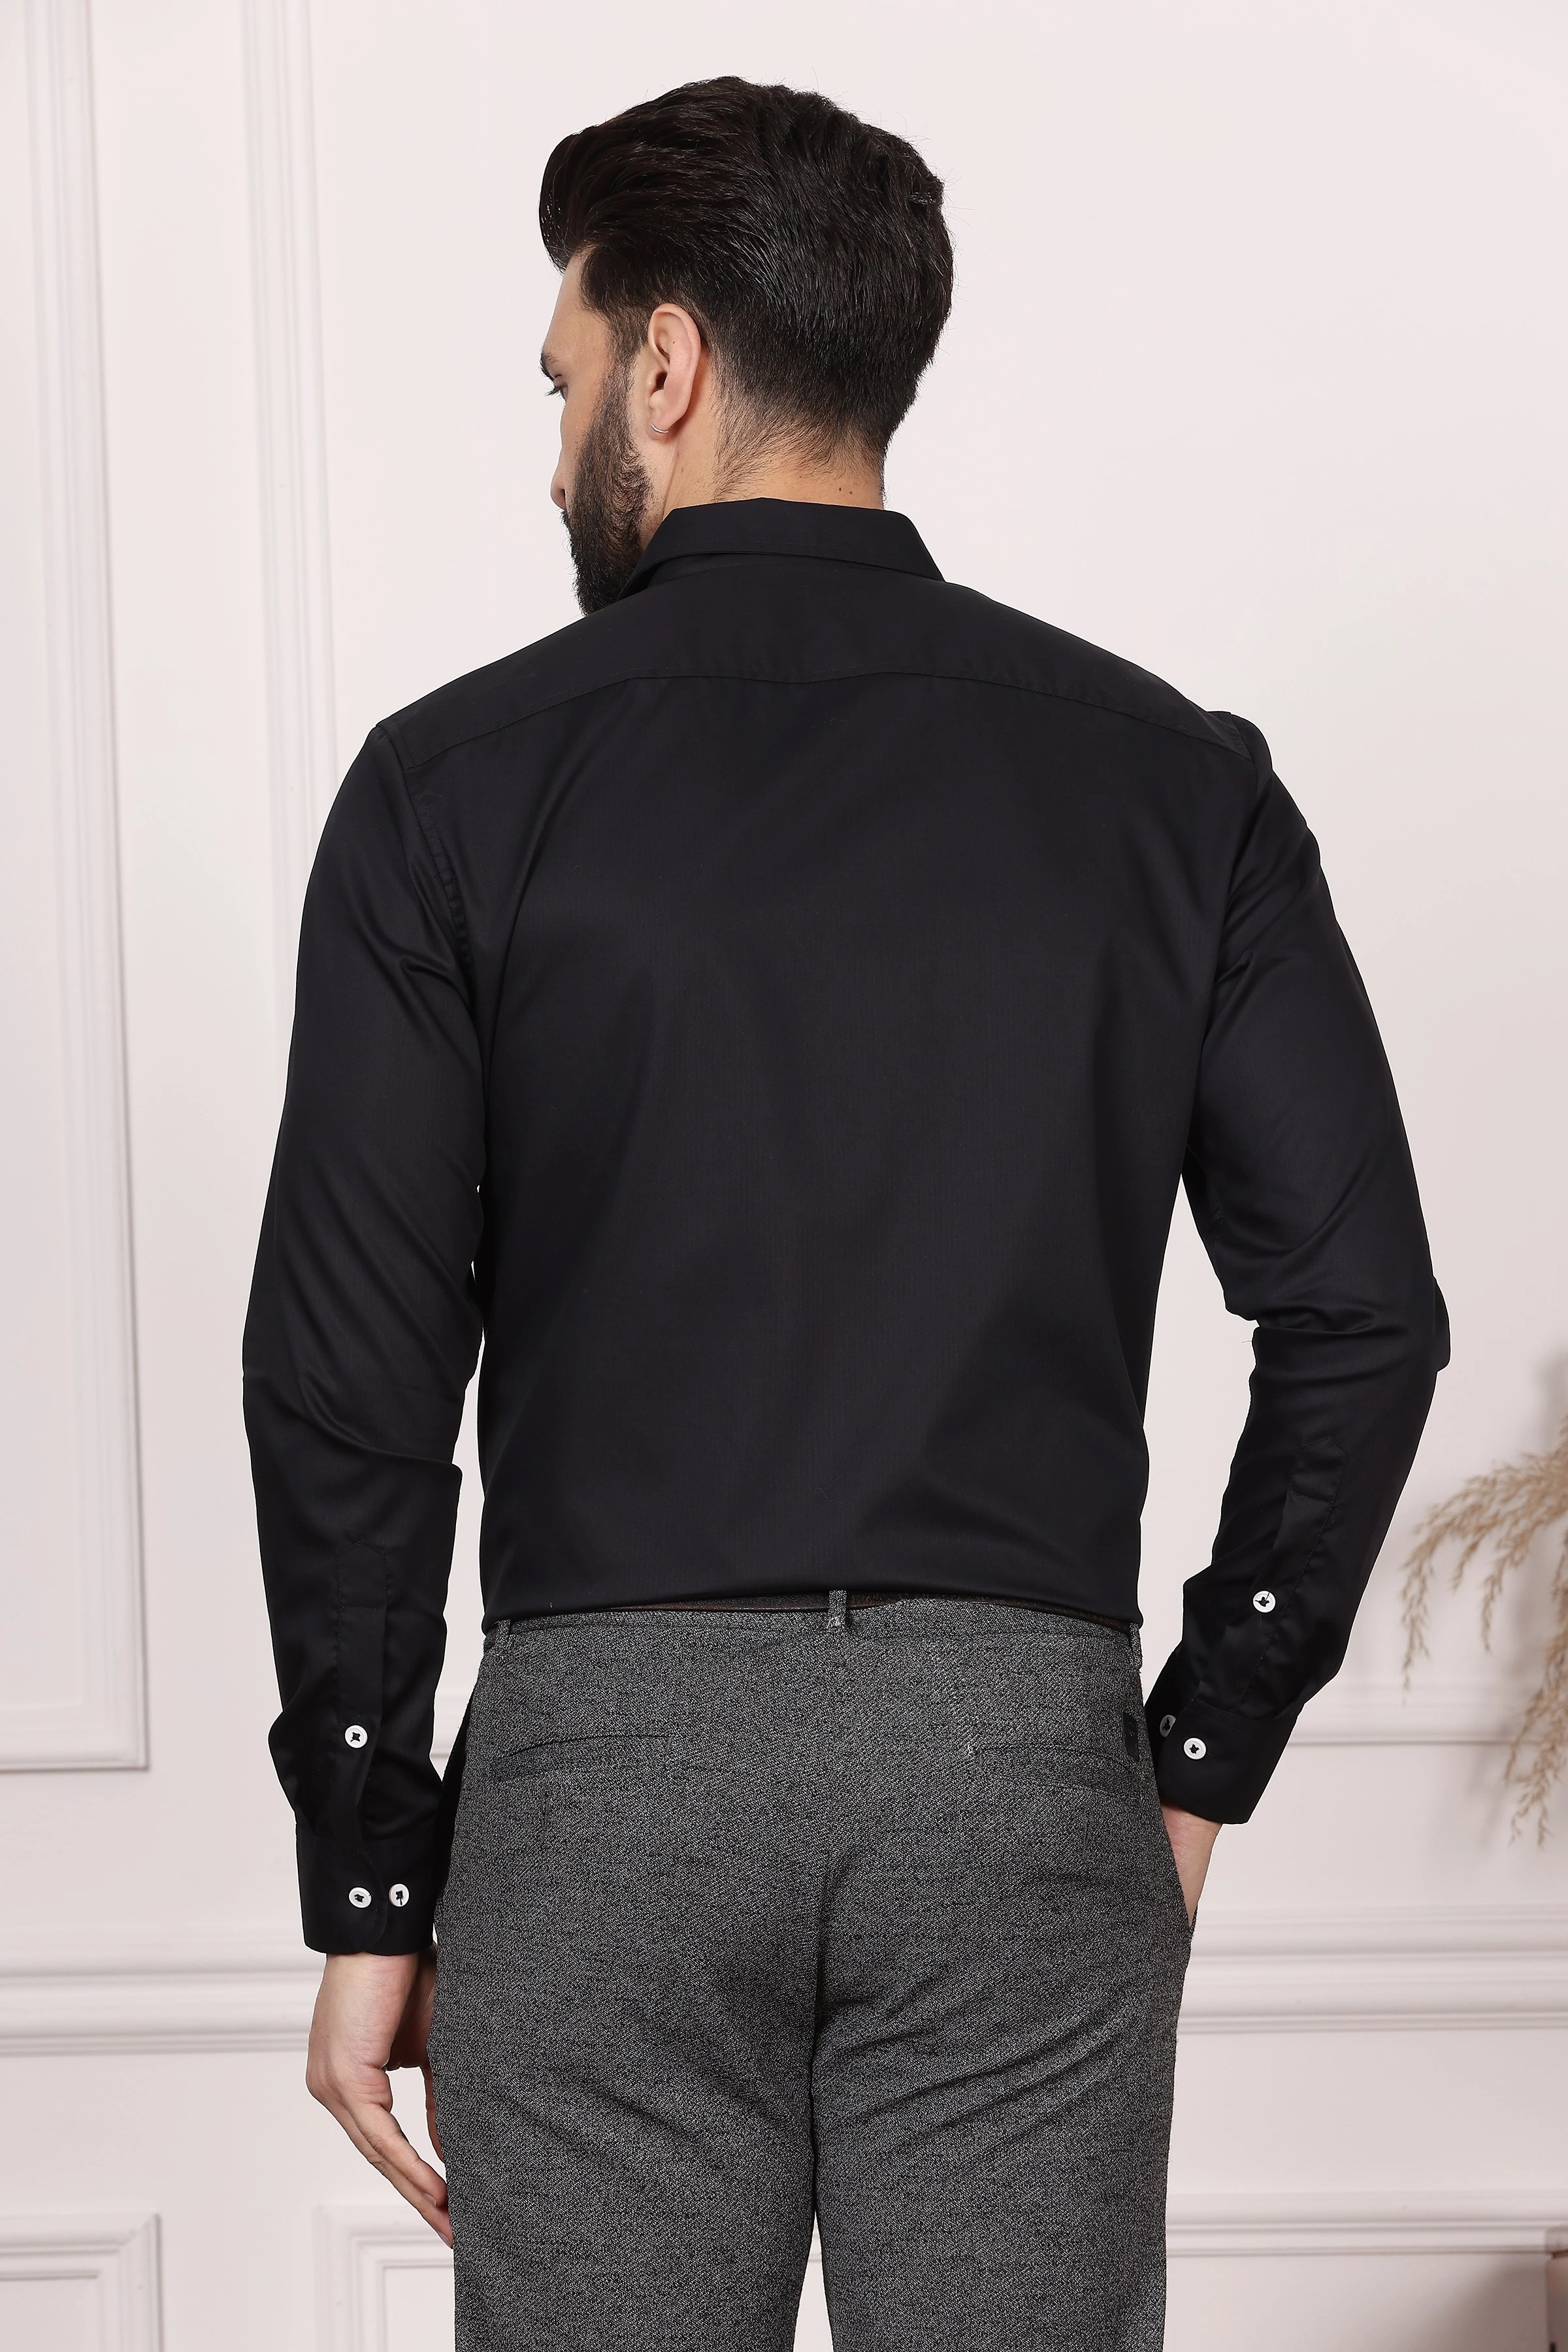 Black Formal Cotton Shirt-S-6